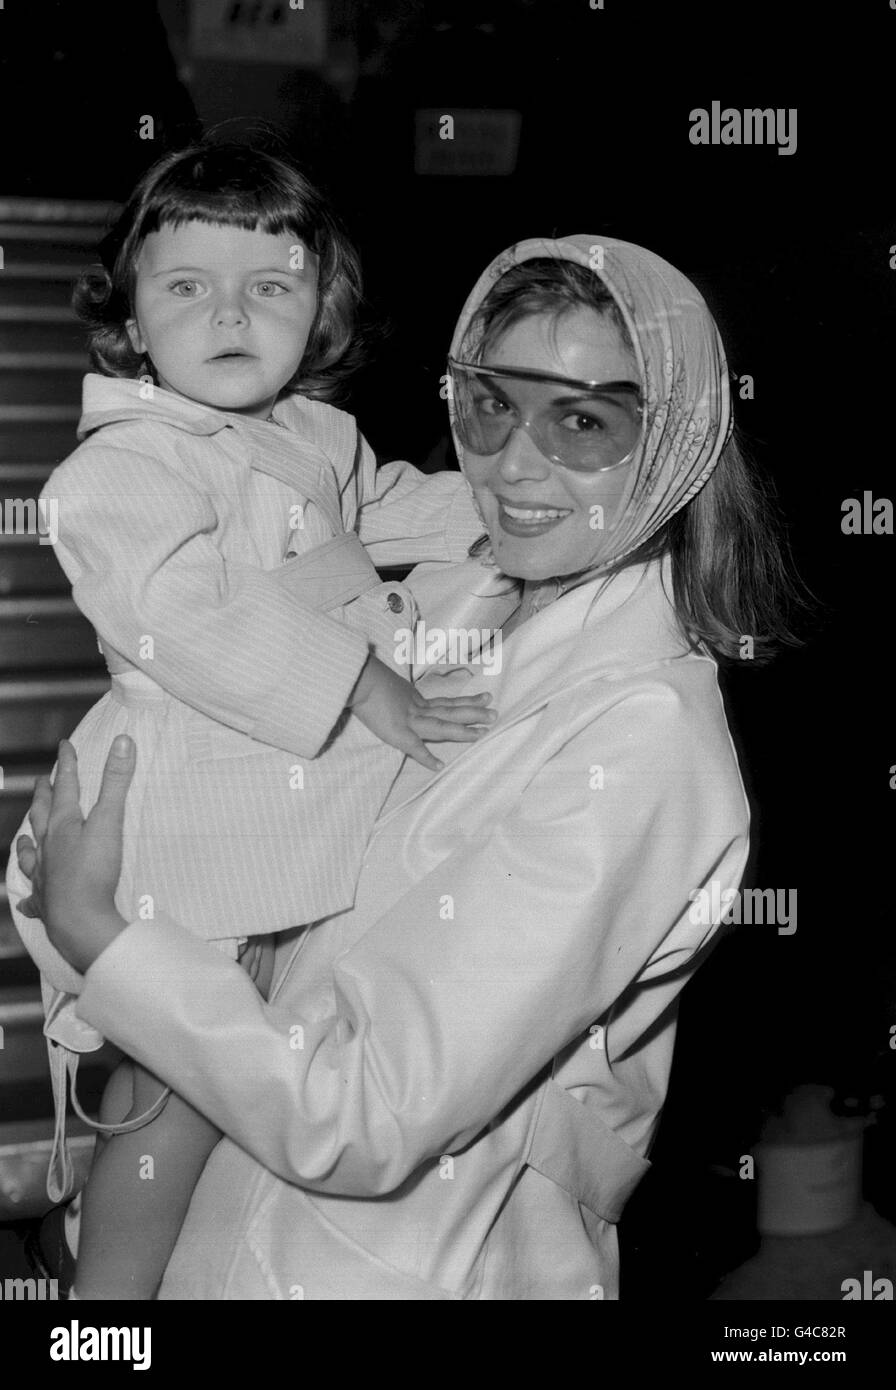 PA NEWS PHOTO  HUNGARIAN BORN ACTRESS EVA BARTOK WITH HER DAUGHTER DEANNE GRAZIA AT LONDON'S HEATHROW AIRPORT Stock Photo